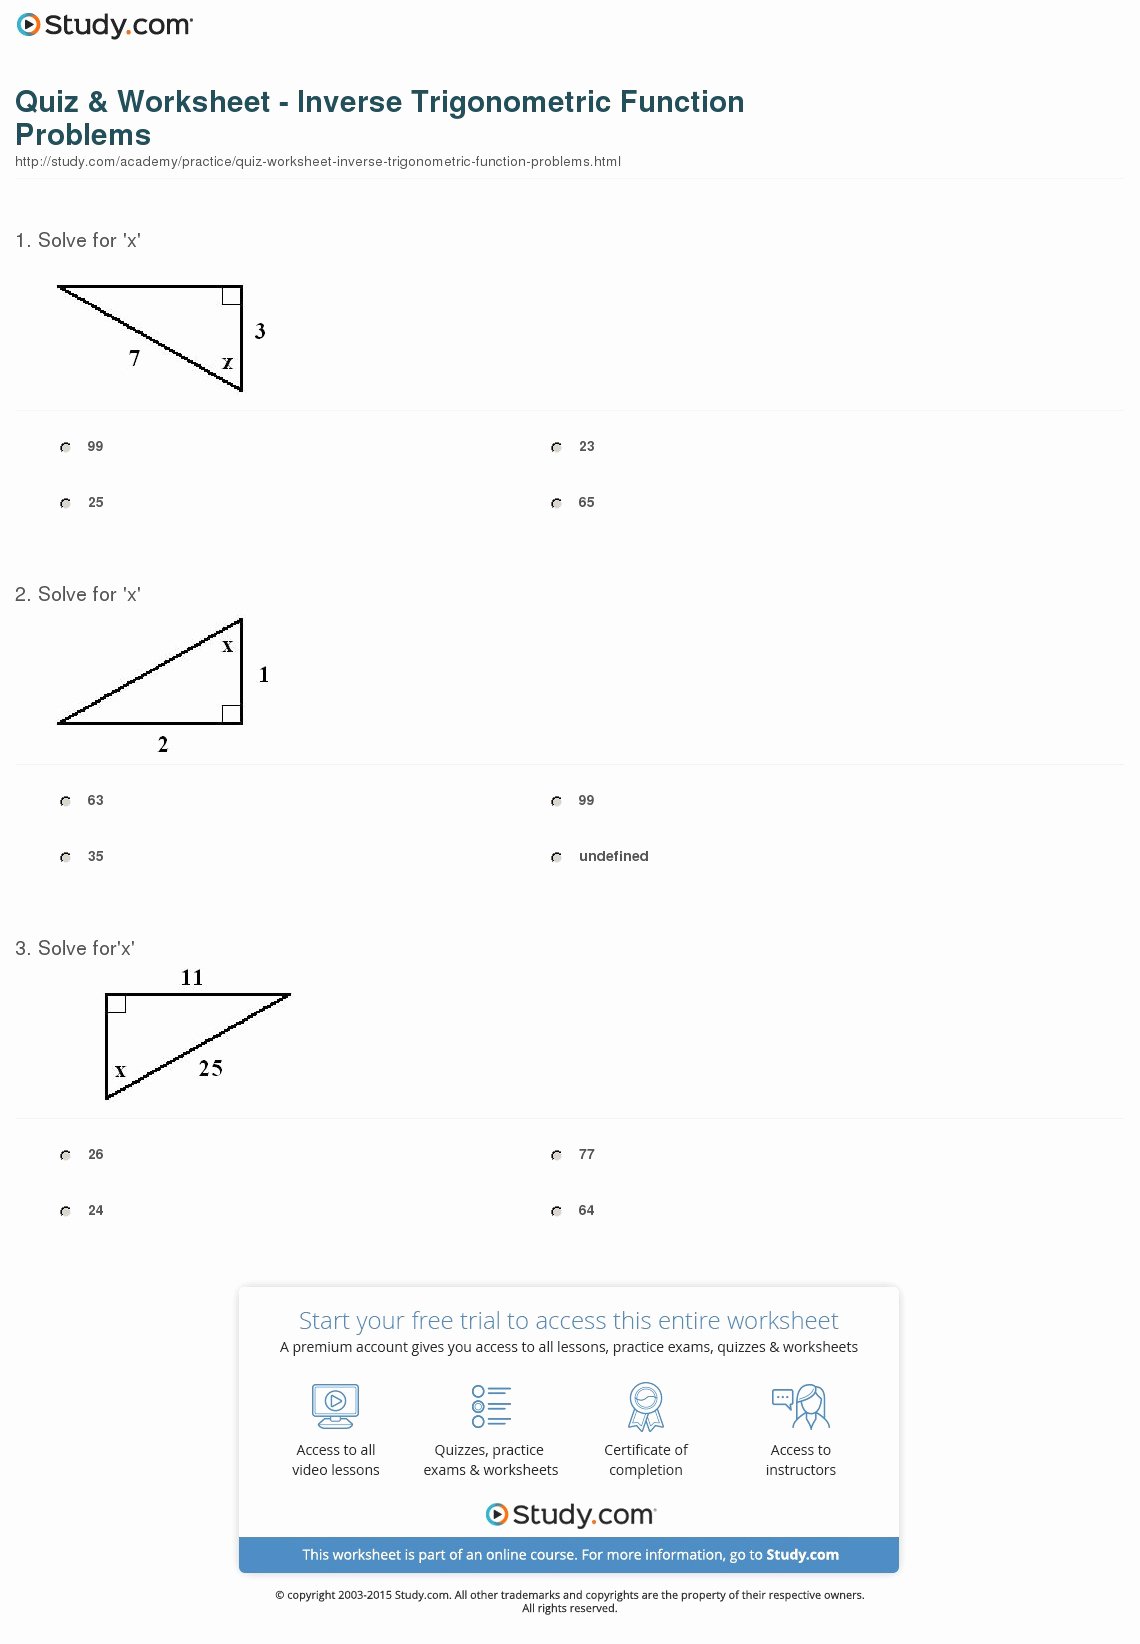 Solving Trigonometric Equations Worksheet Answers Fresh Preschool Worksheets 45 Excelent Inverse Trigonometric